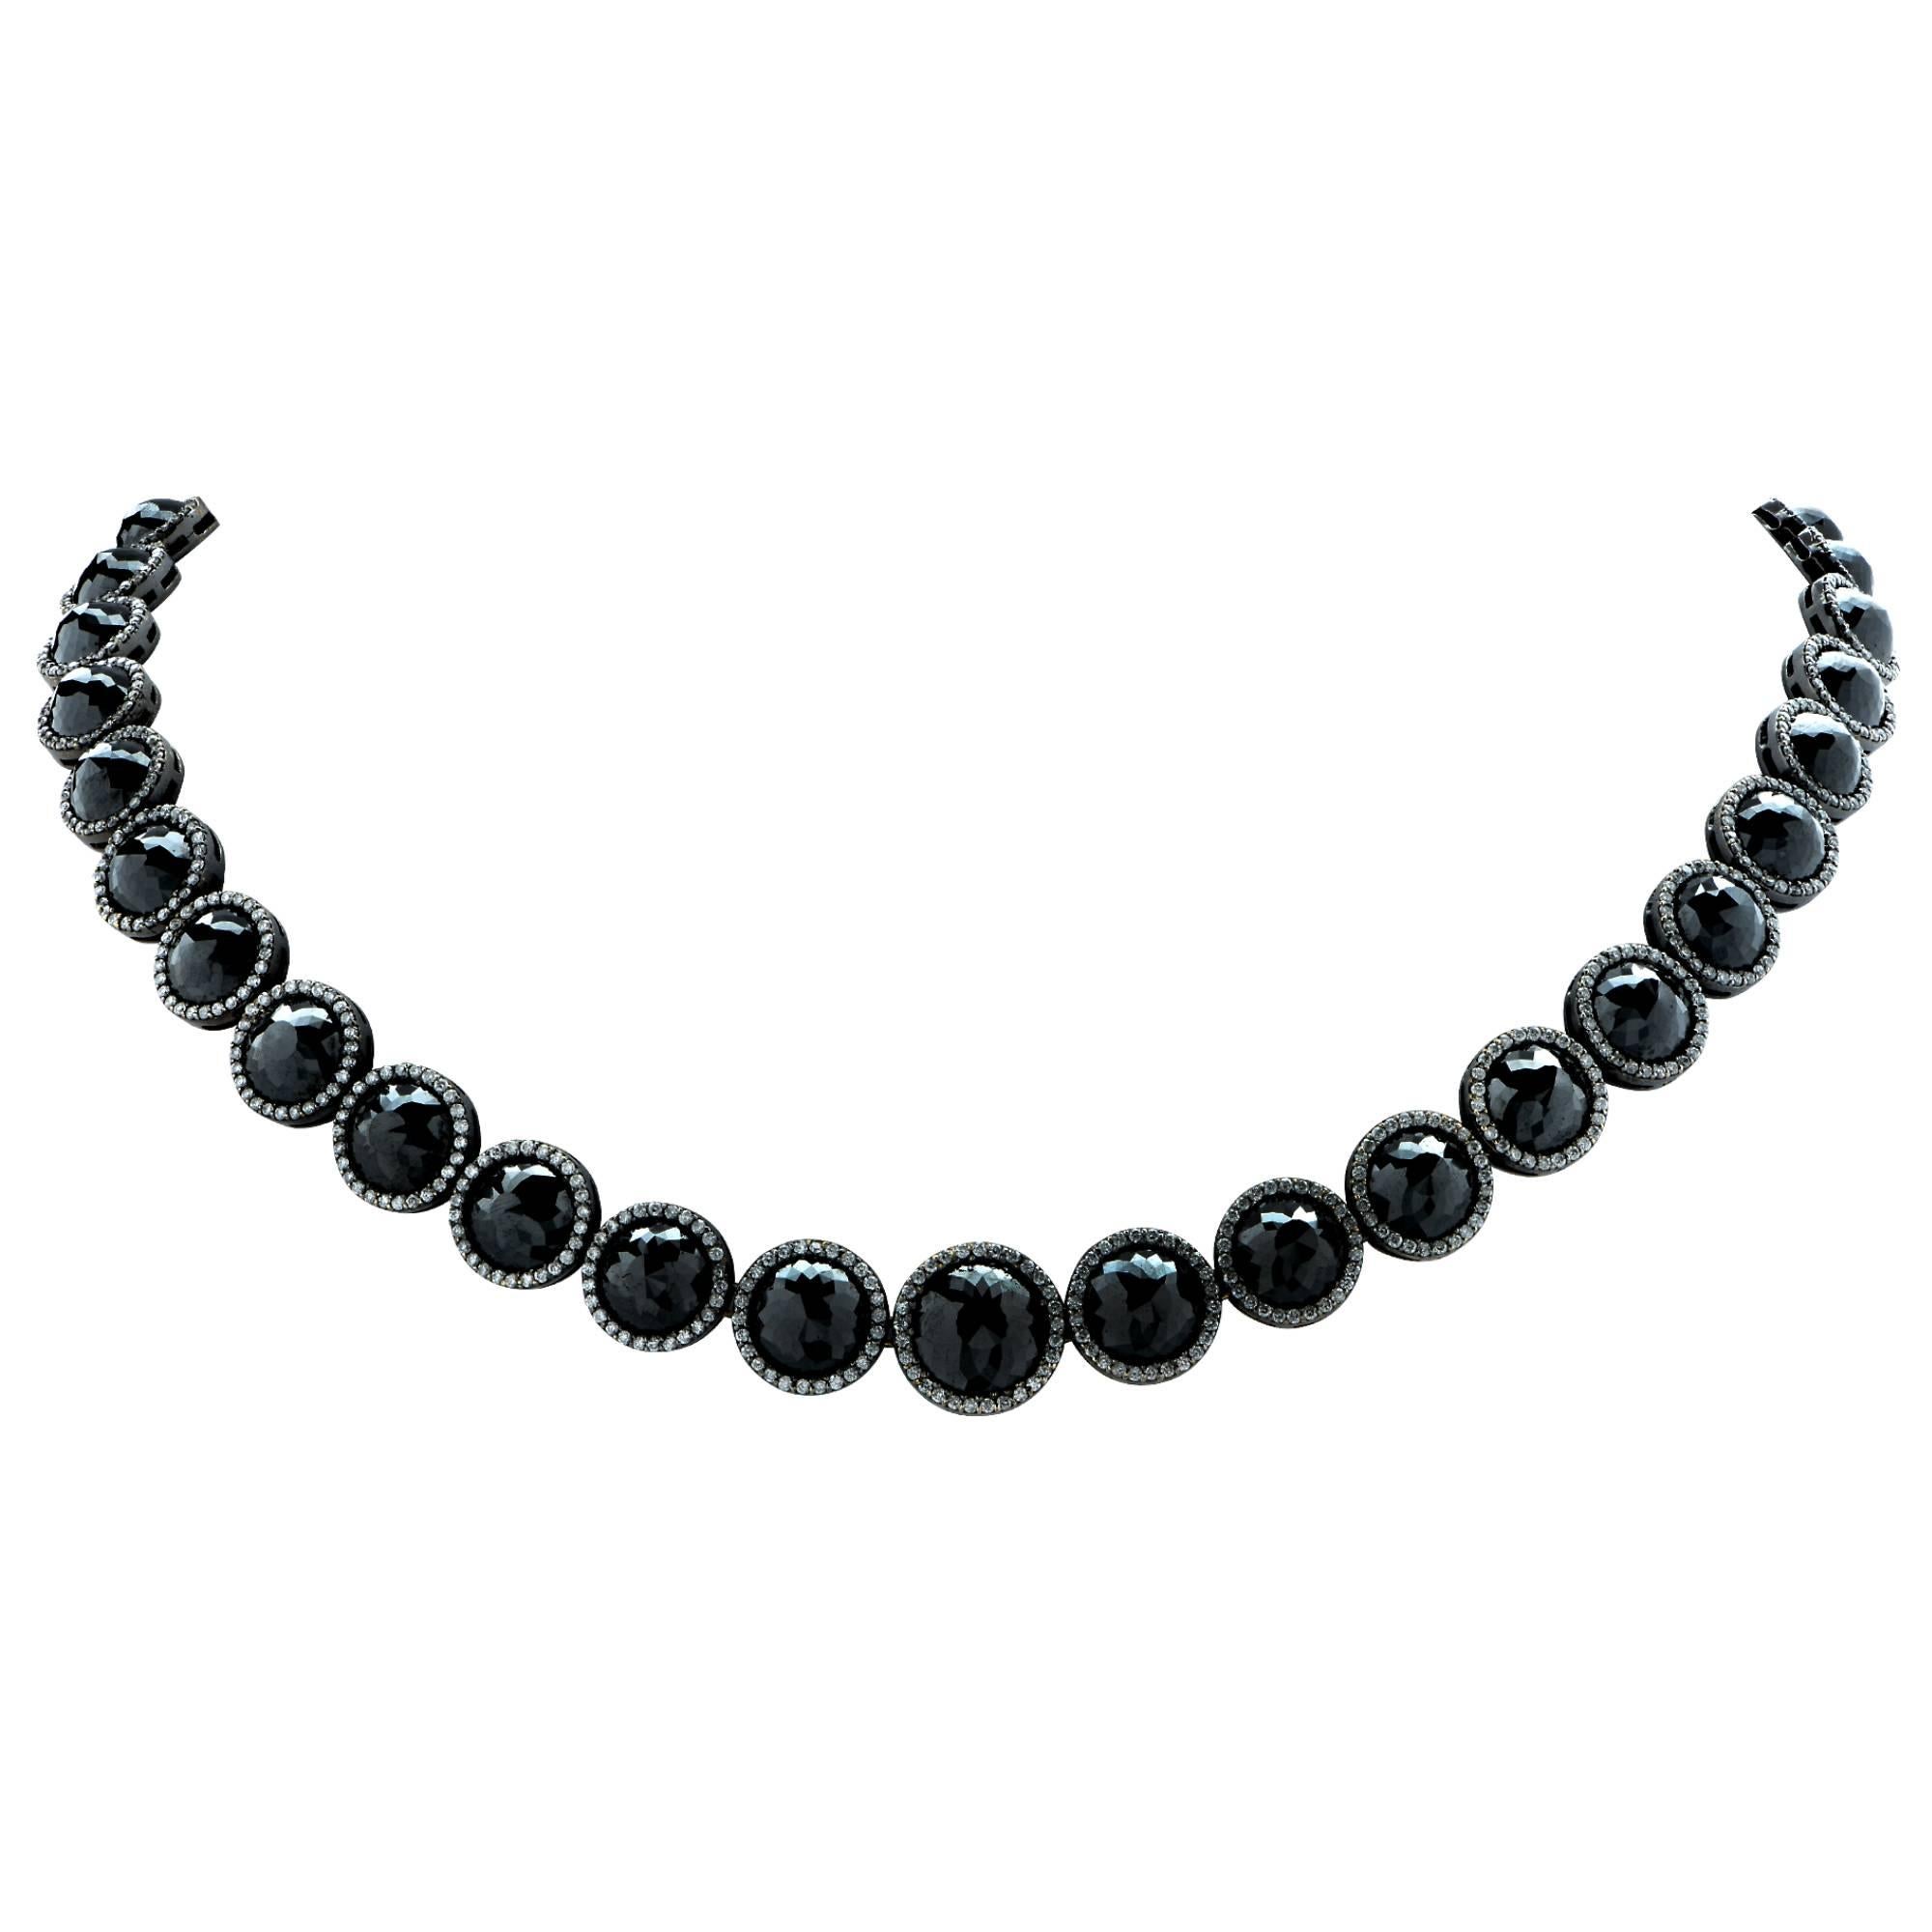 92.08 Carat Black Diamond Riviere Necklace